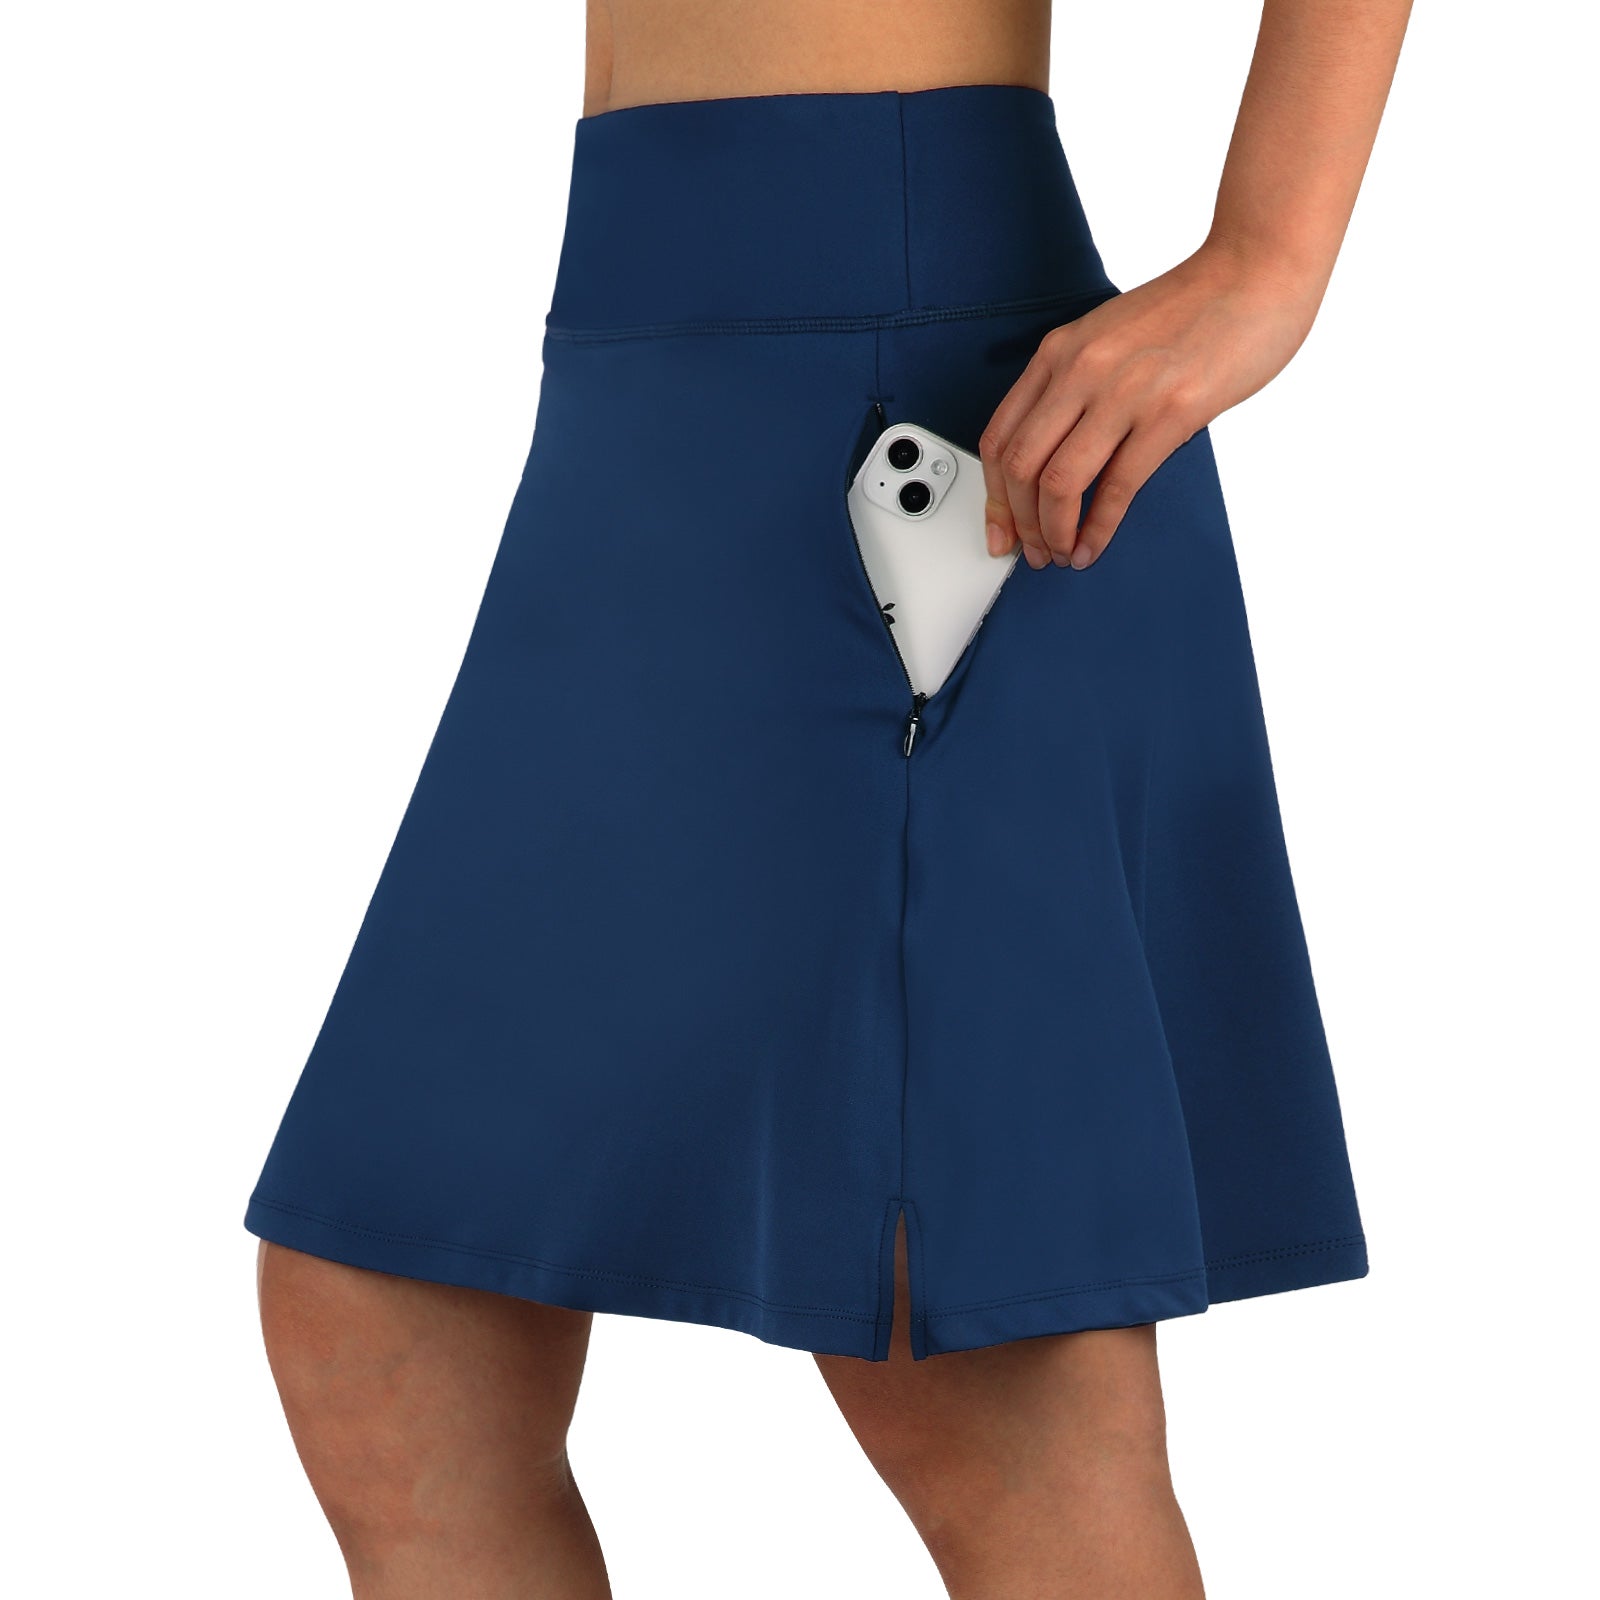 Skirts for Women Womens Skorts Shorts Skirt High Waisted Casual